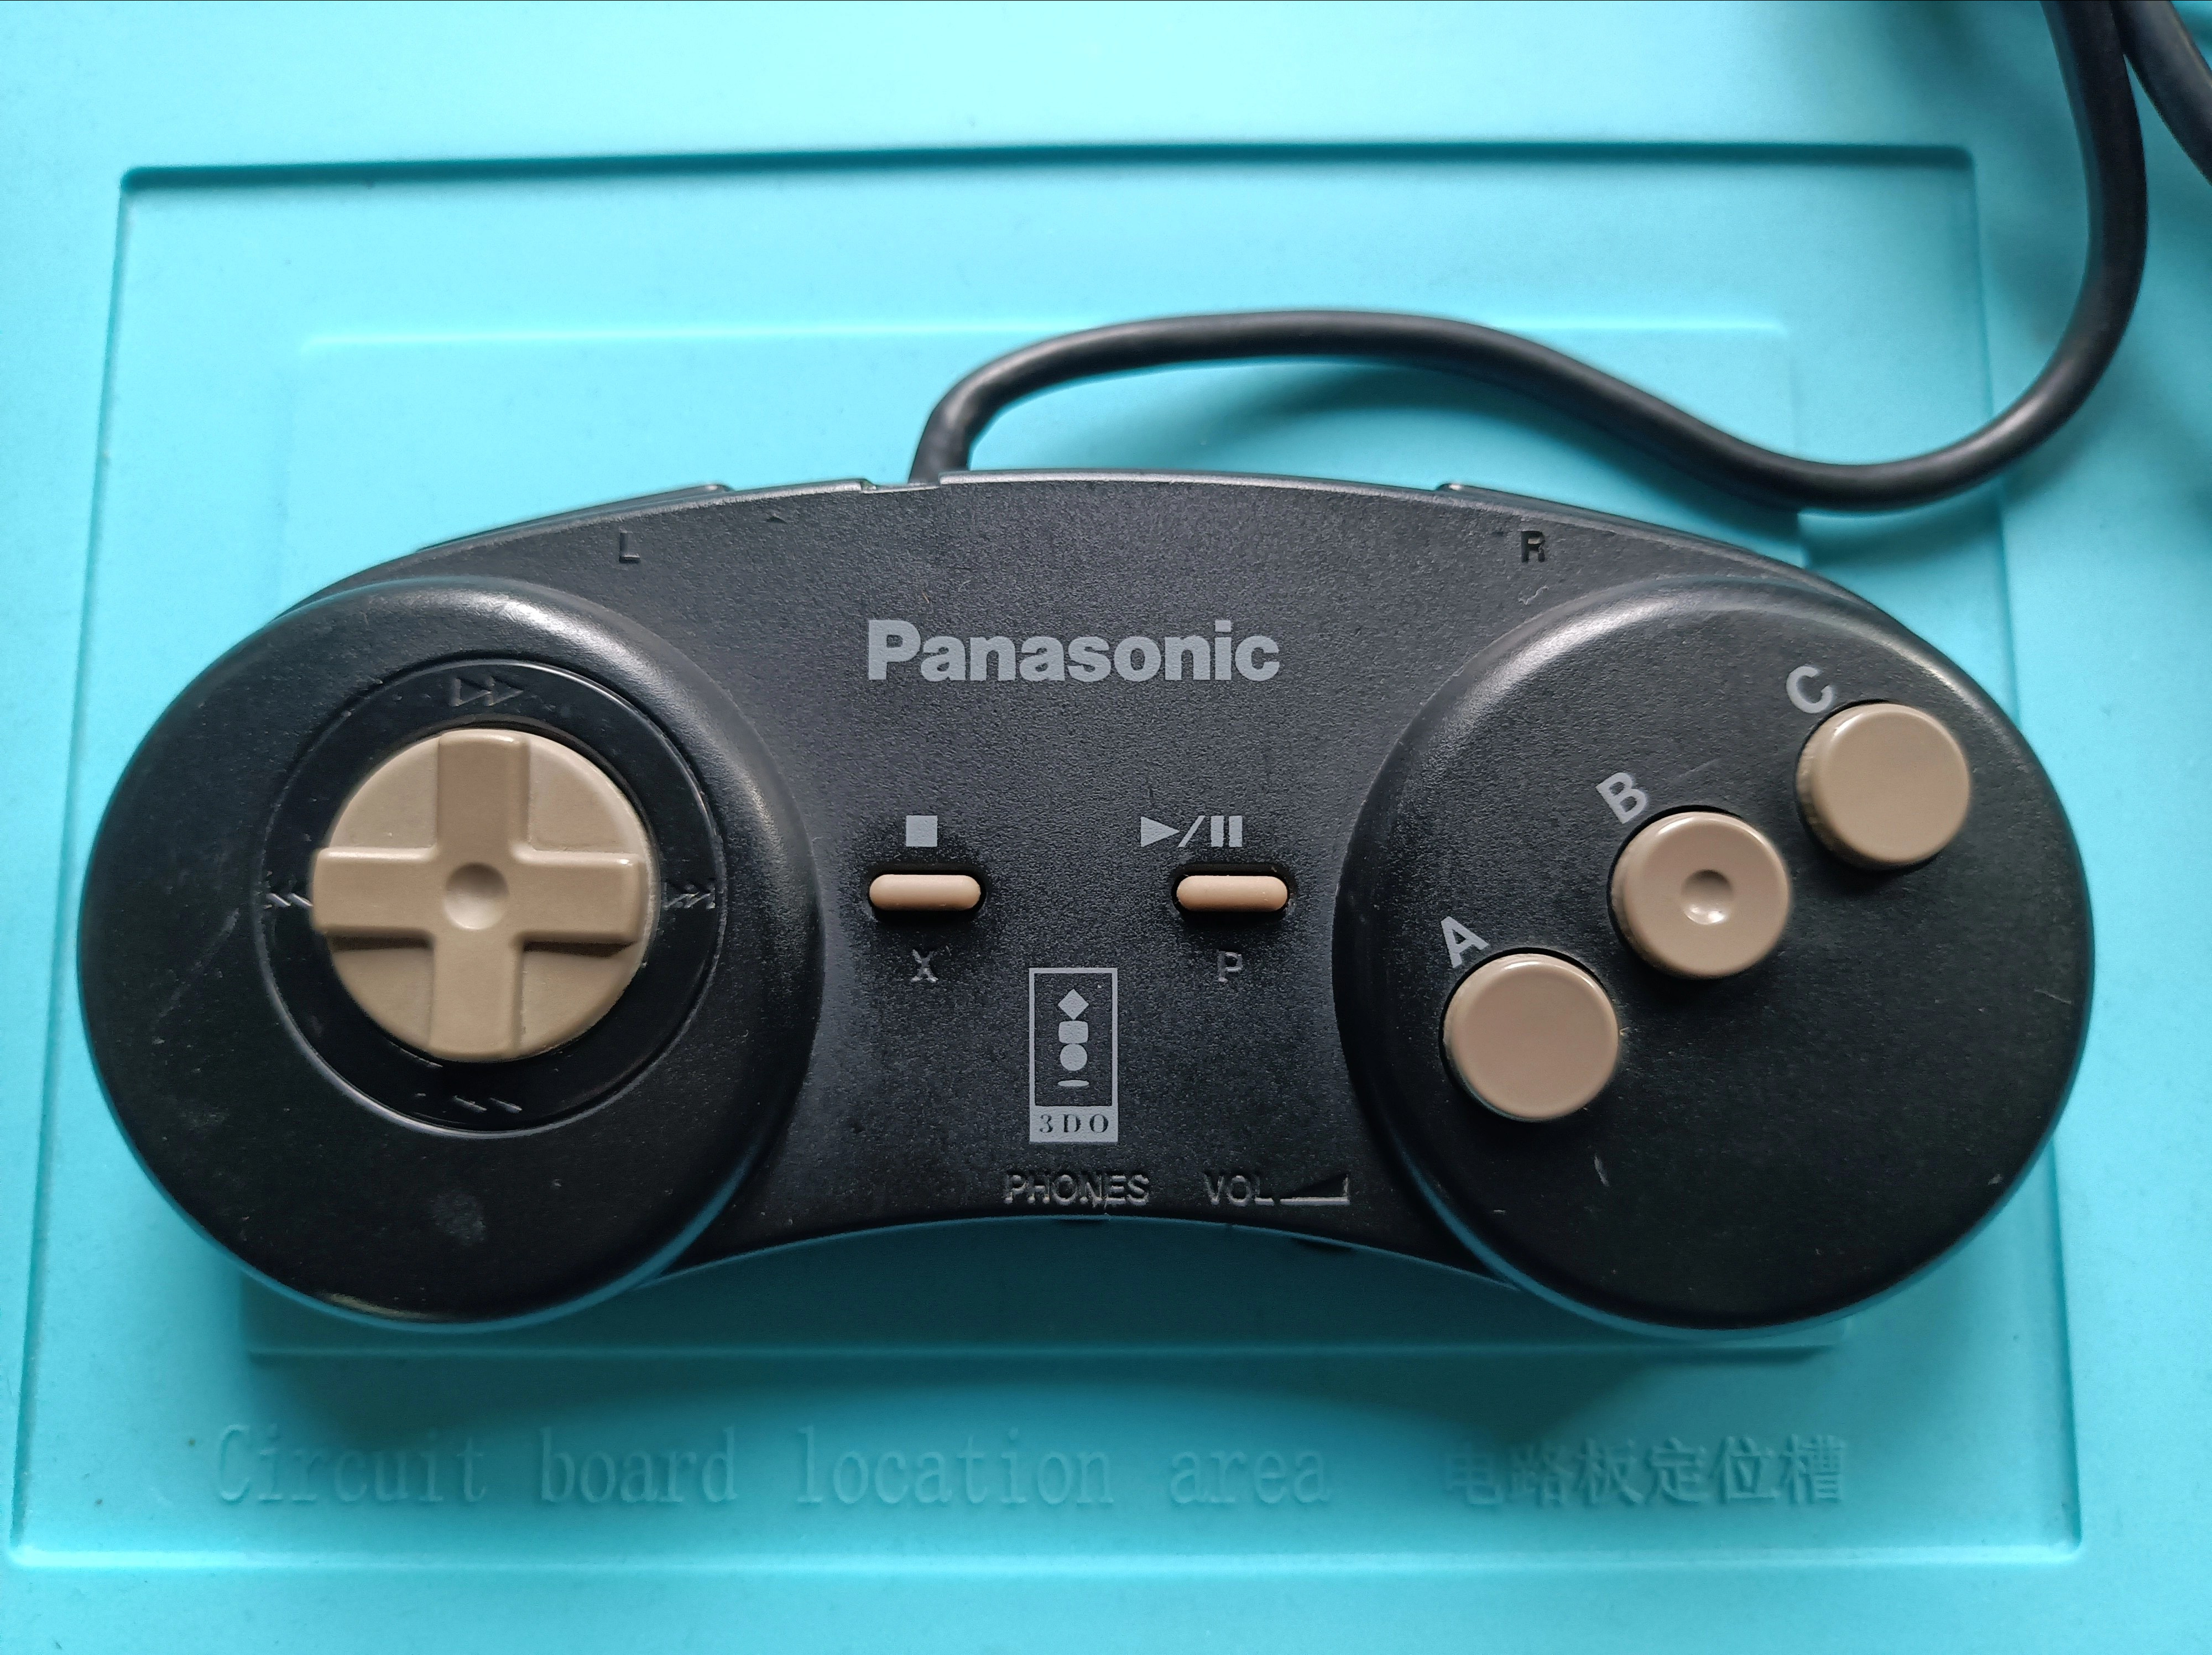 Panasonic 3DO controller